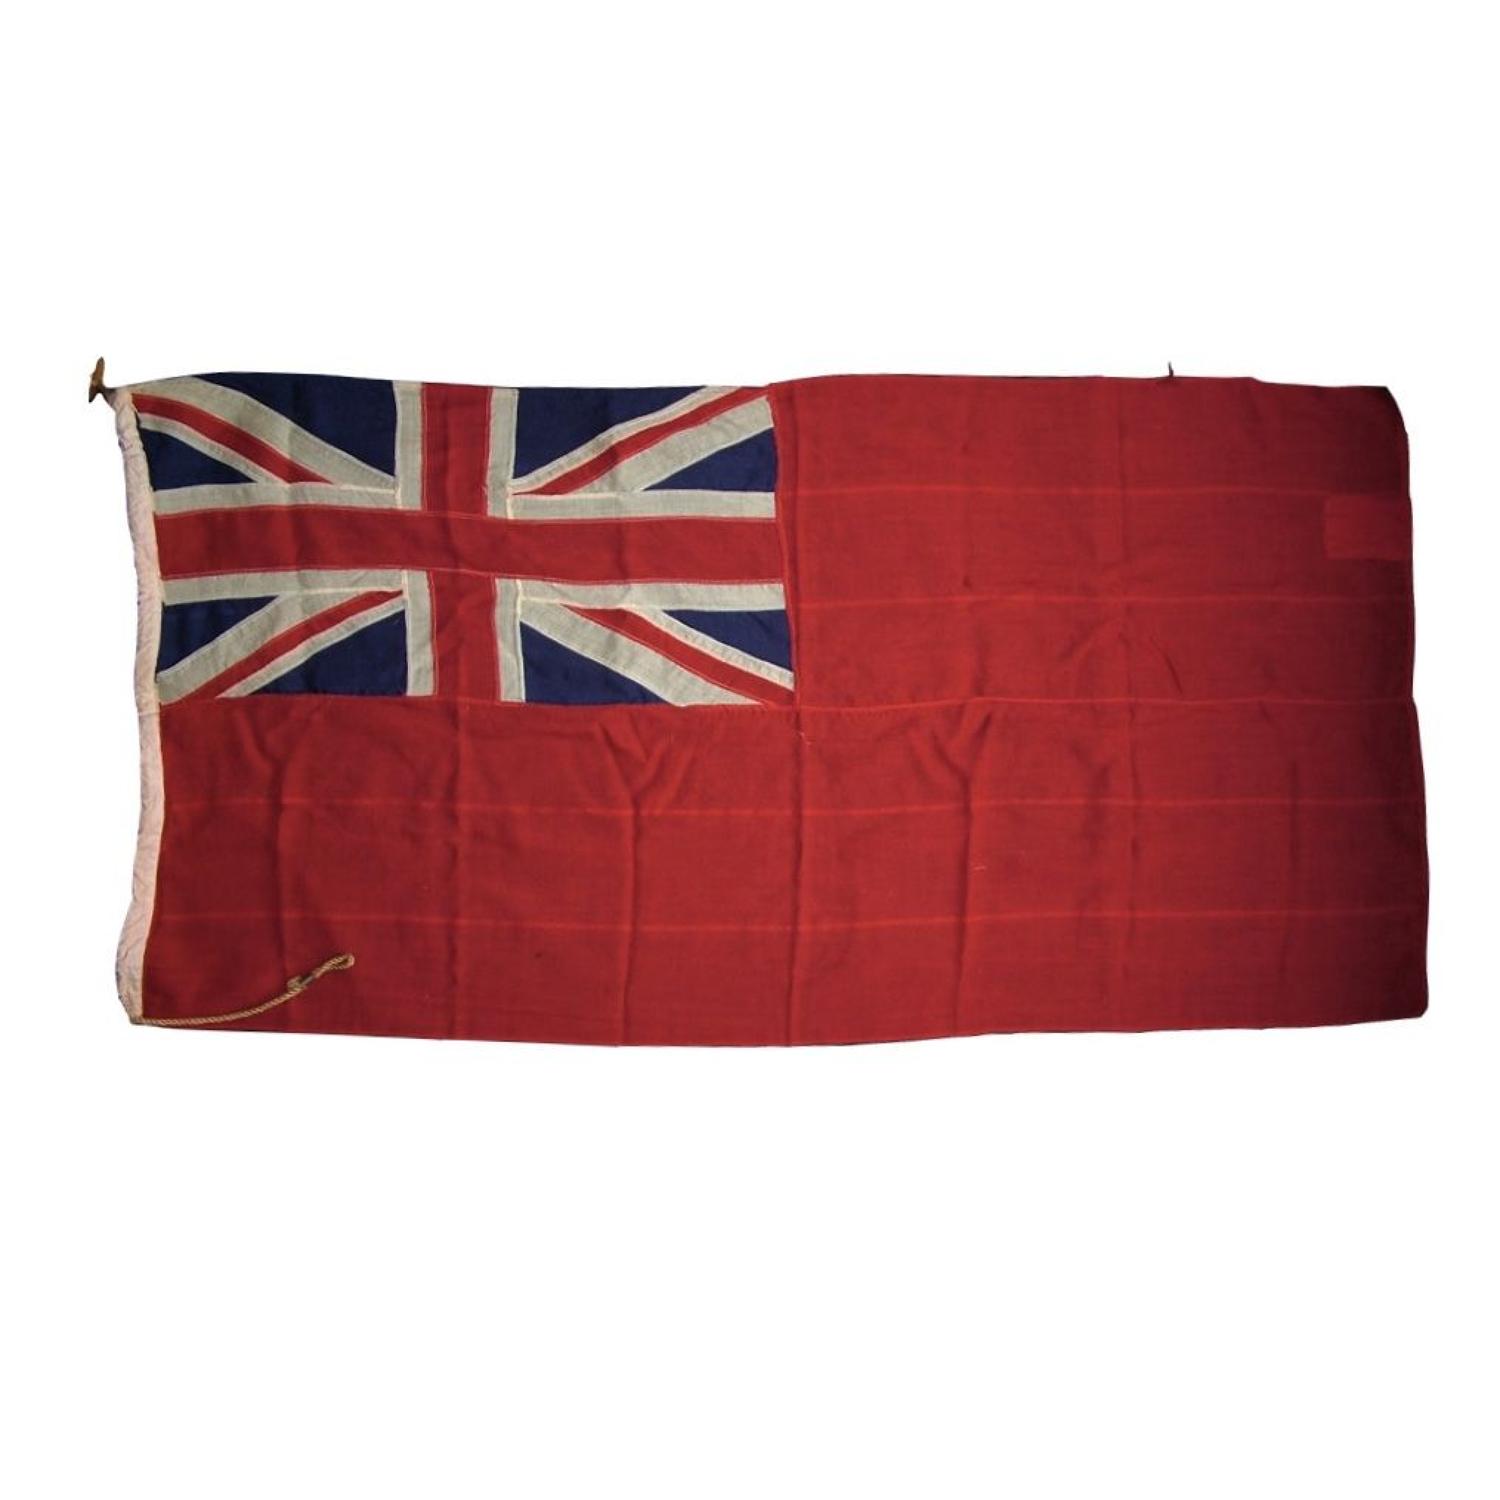 Royal Navy red ensign